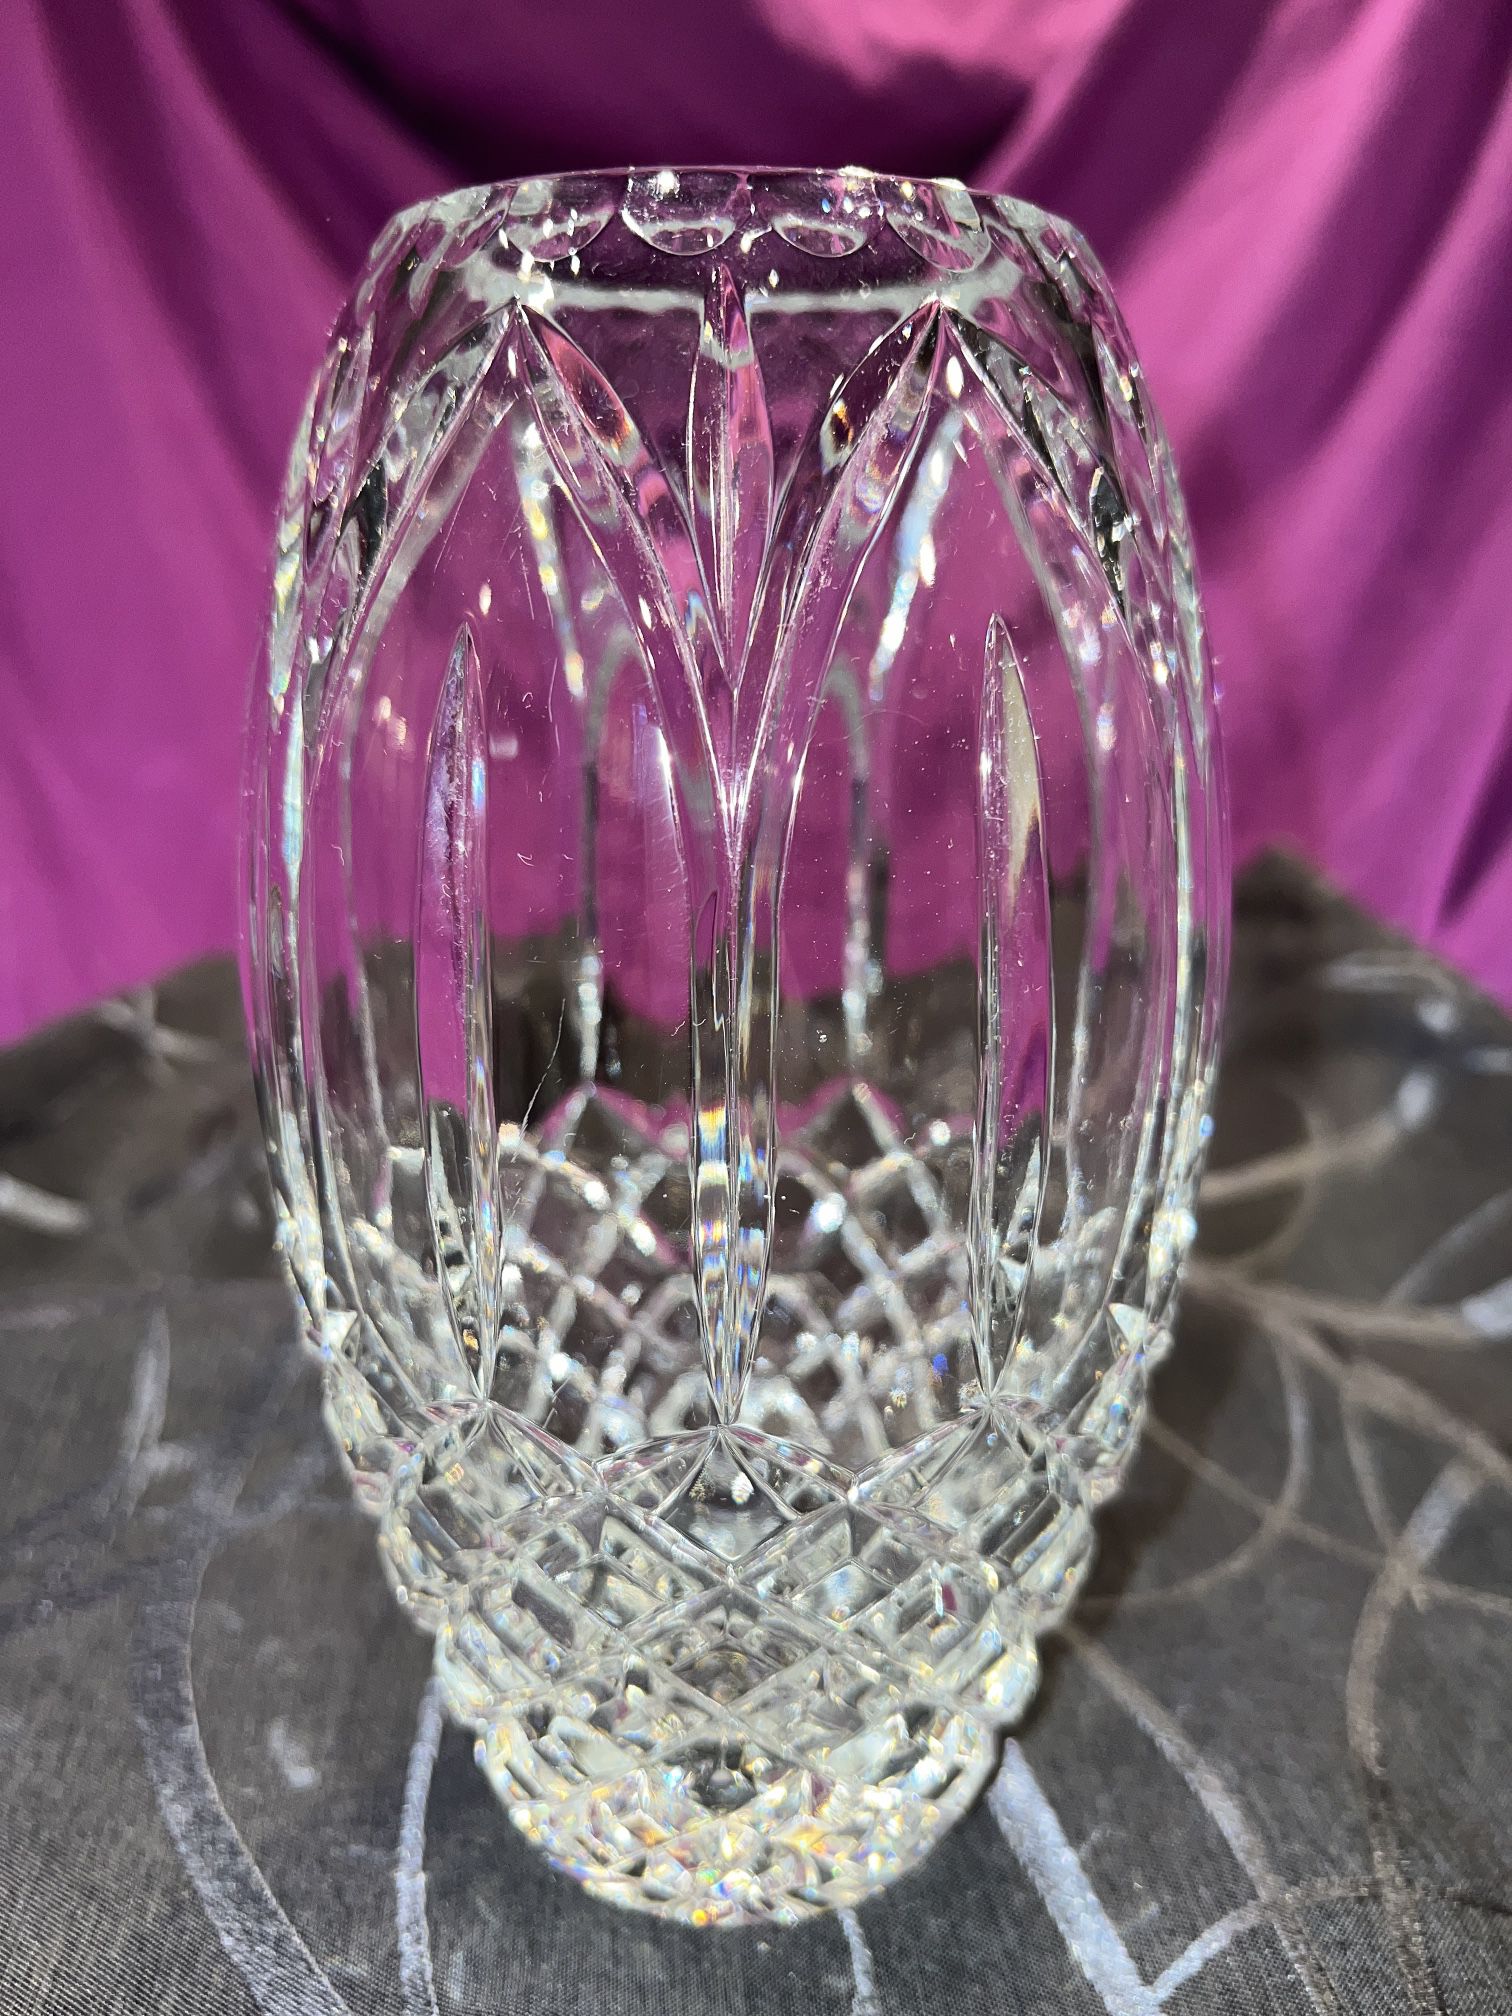 Crystal Hand Cut Vase Diamond Cut & Scalloped Top